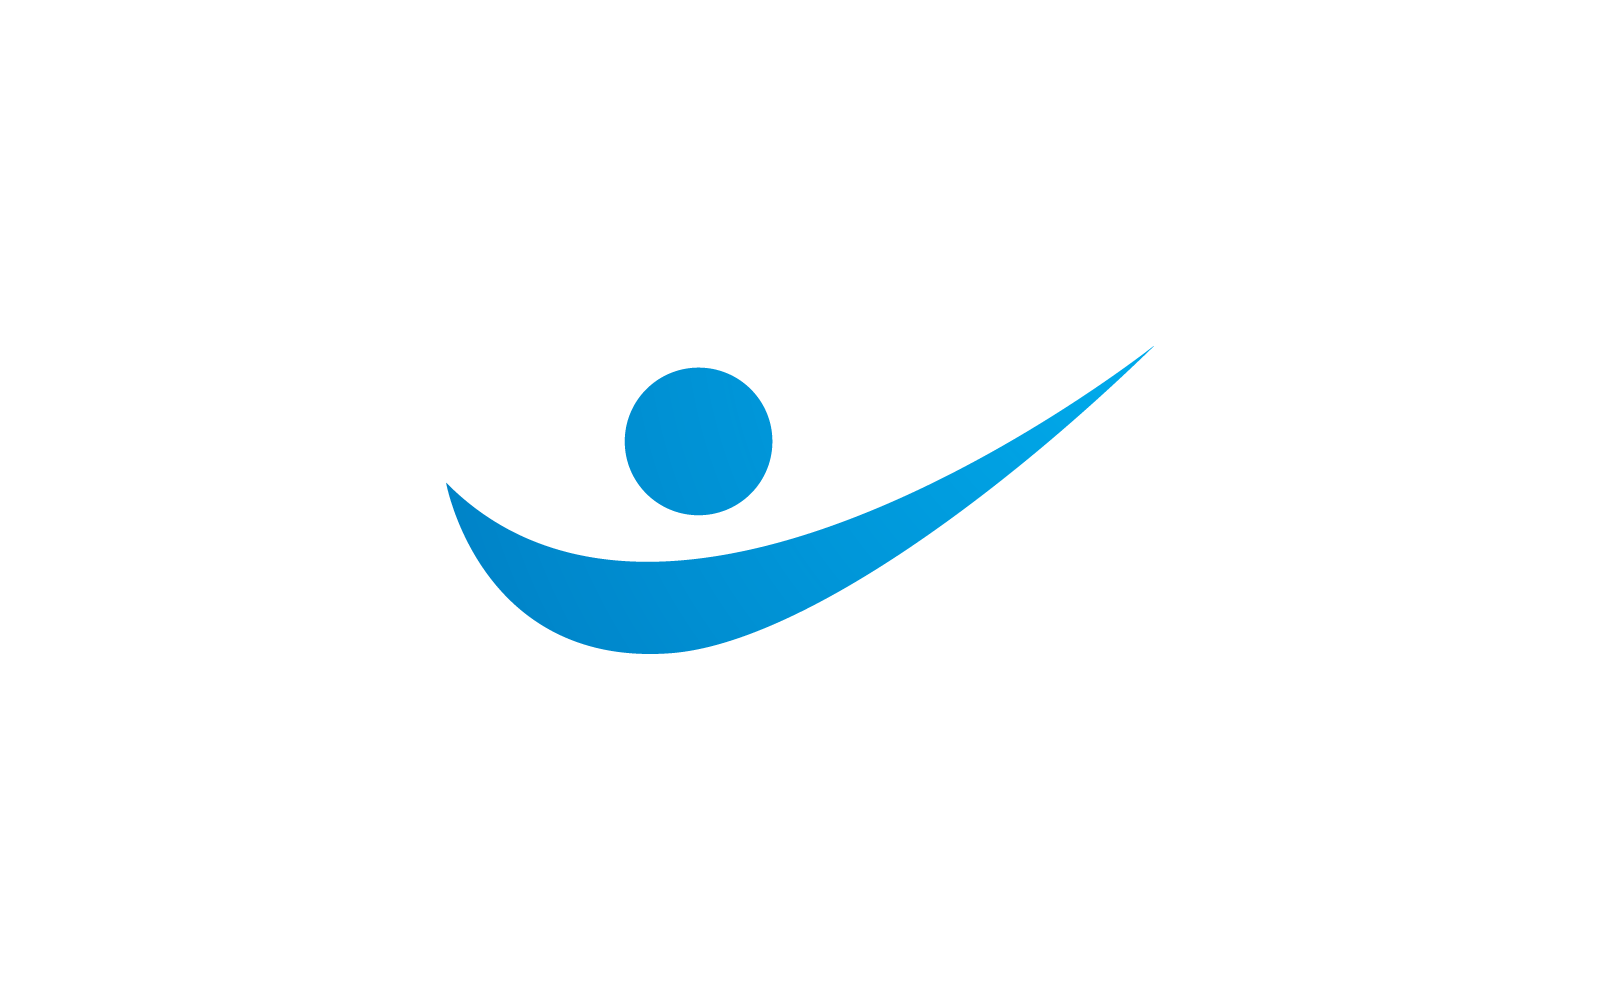 Community, network and social illustration logo flat design